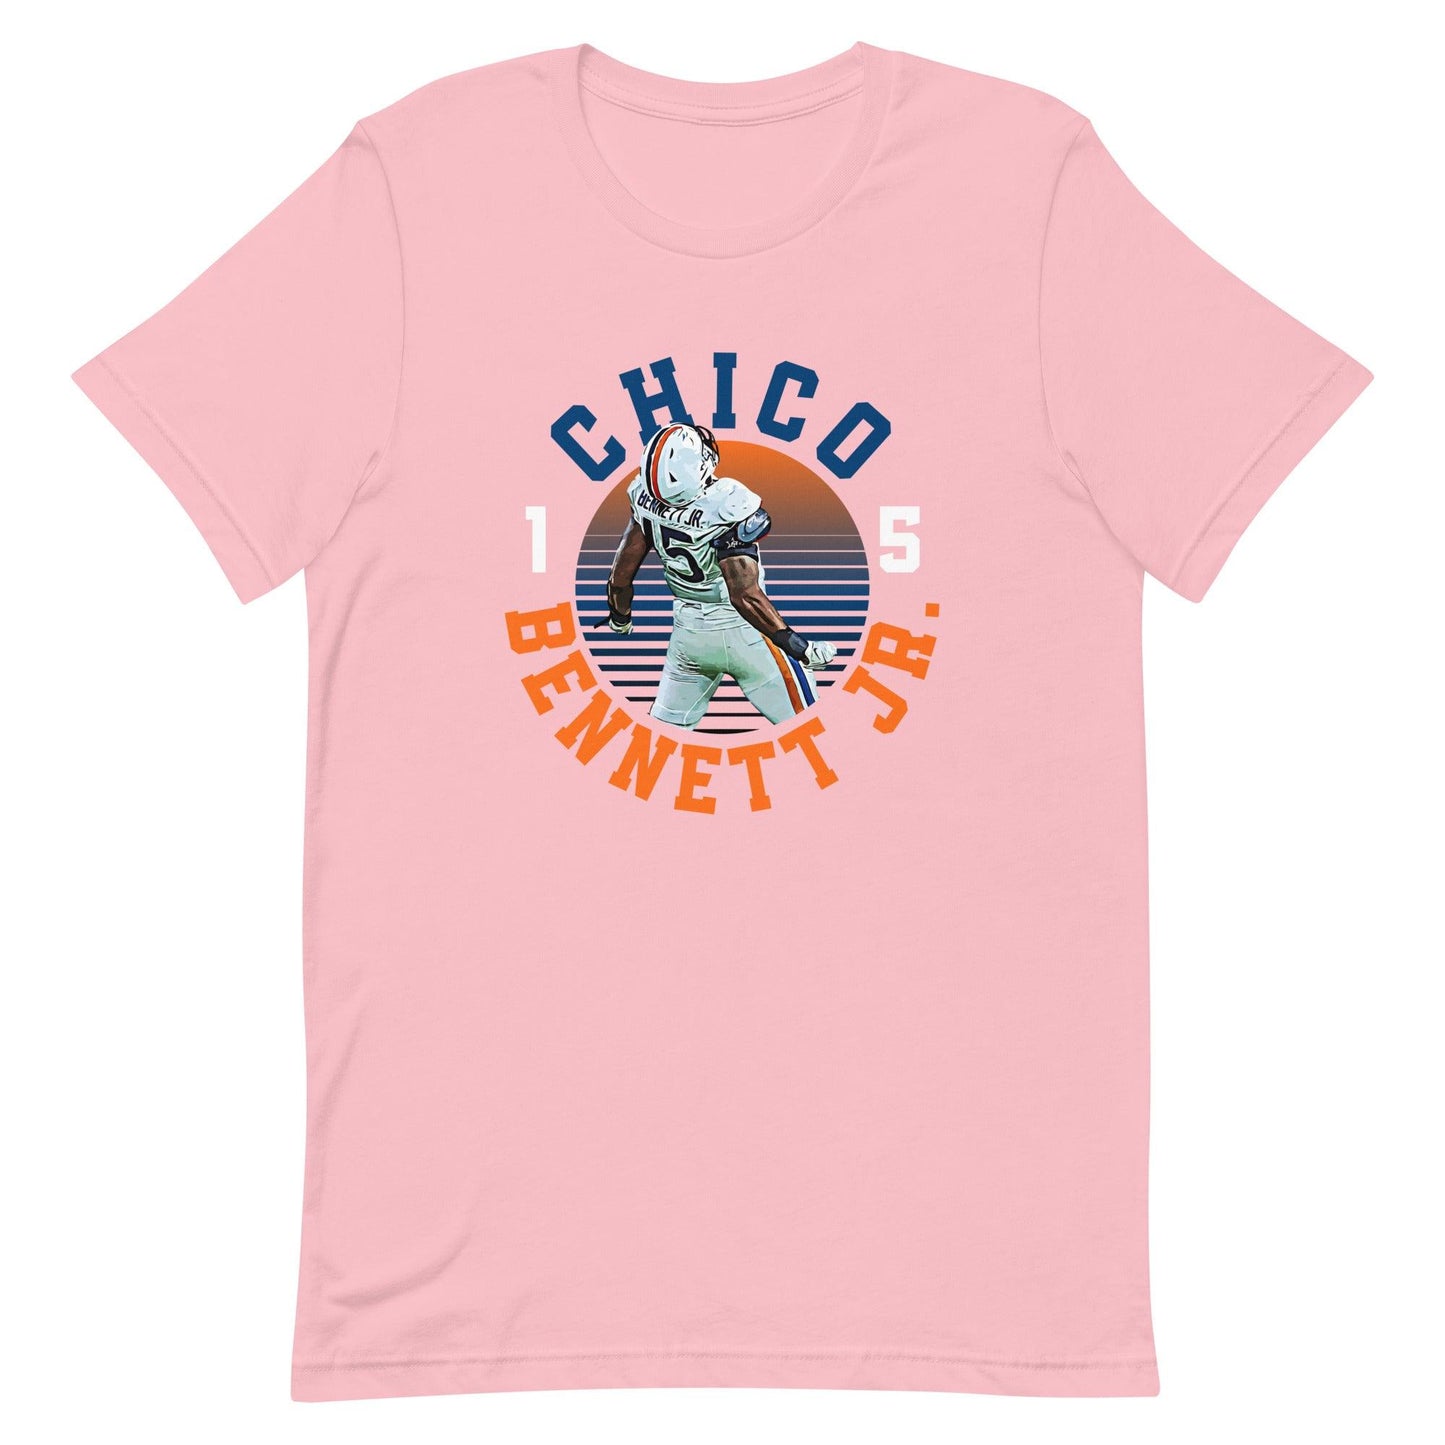 Chico Bennett Jr. "Gameday" t-shirt - Fan Arch